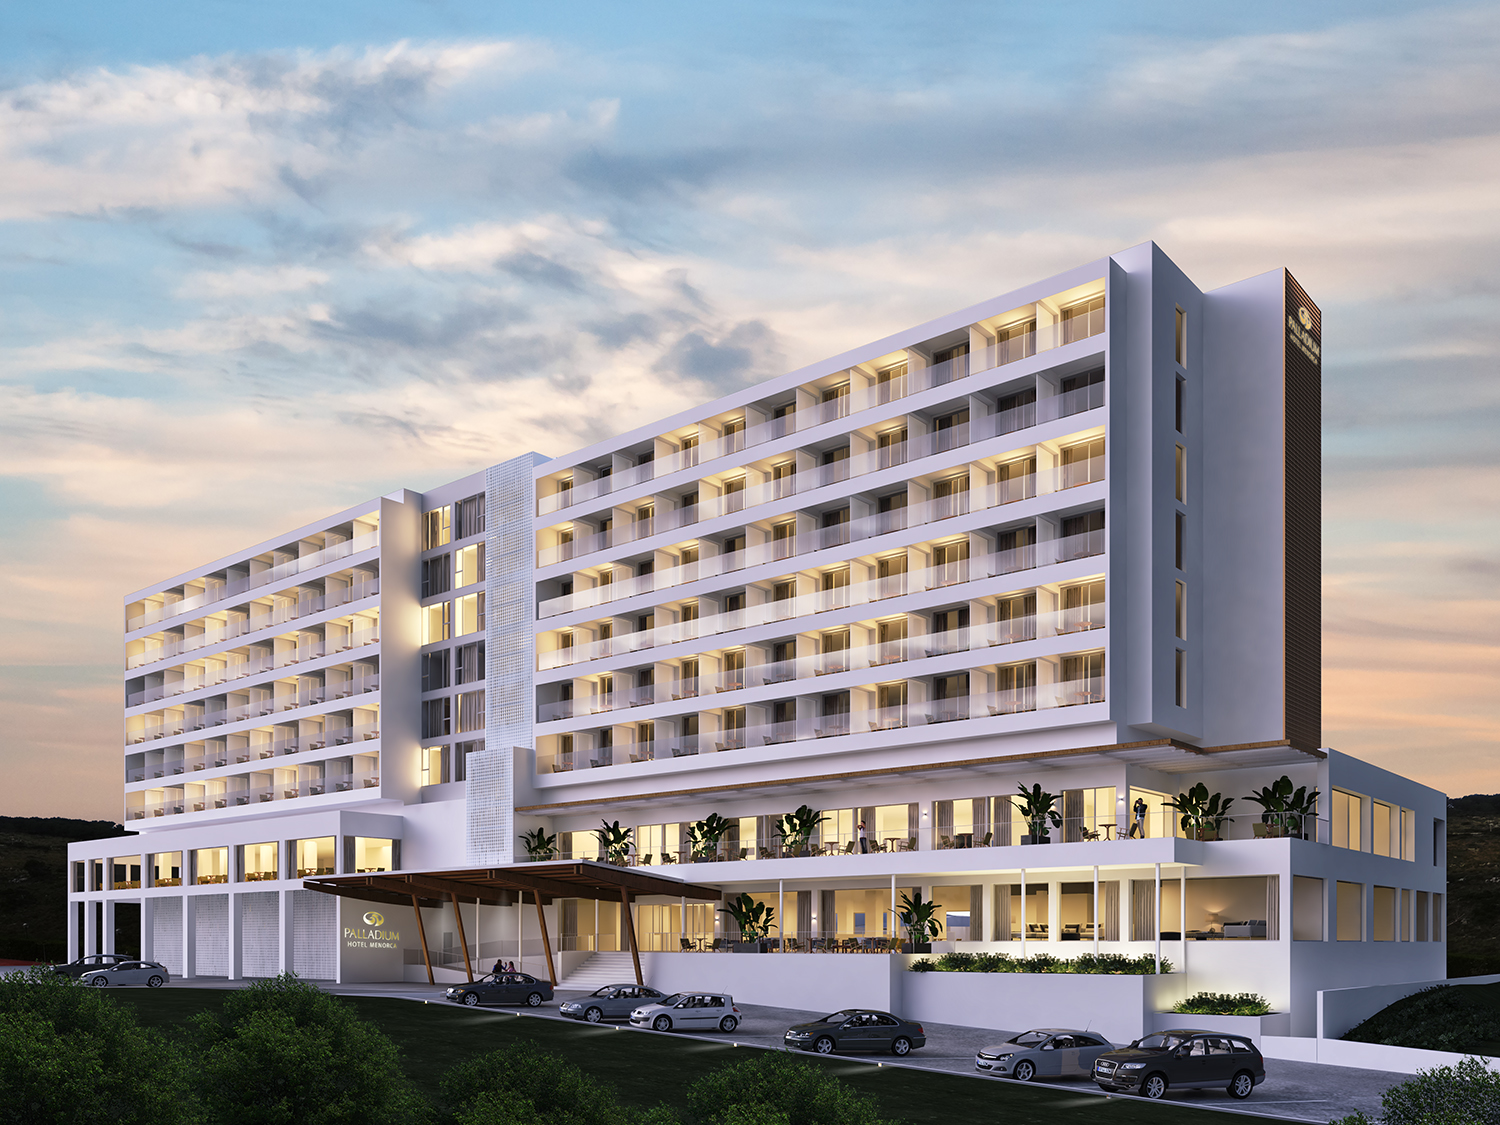 Hotel Menorca, Grand Palladium Group, May 2021